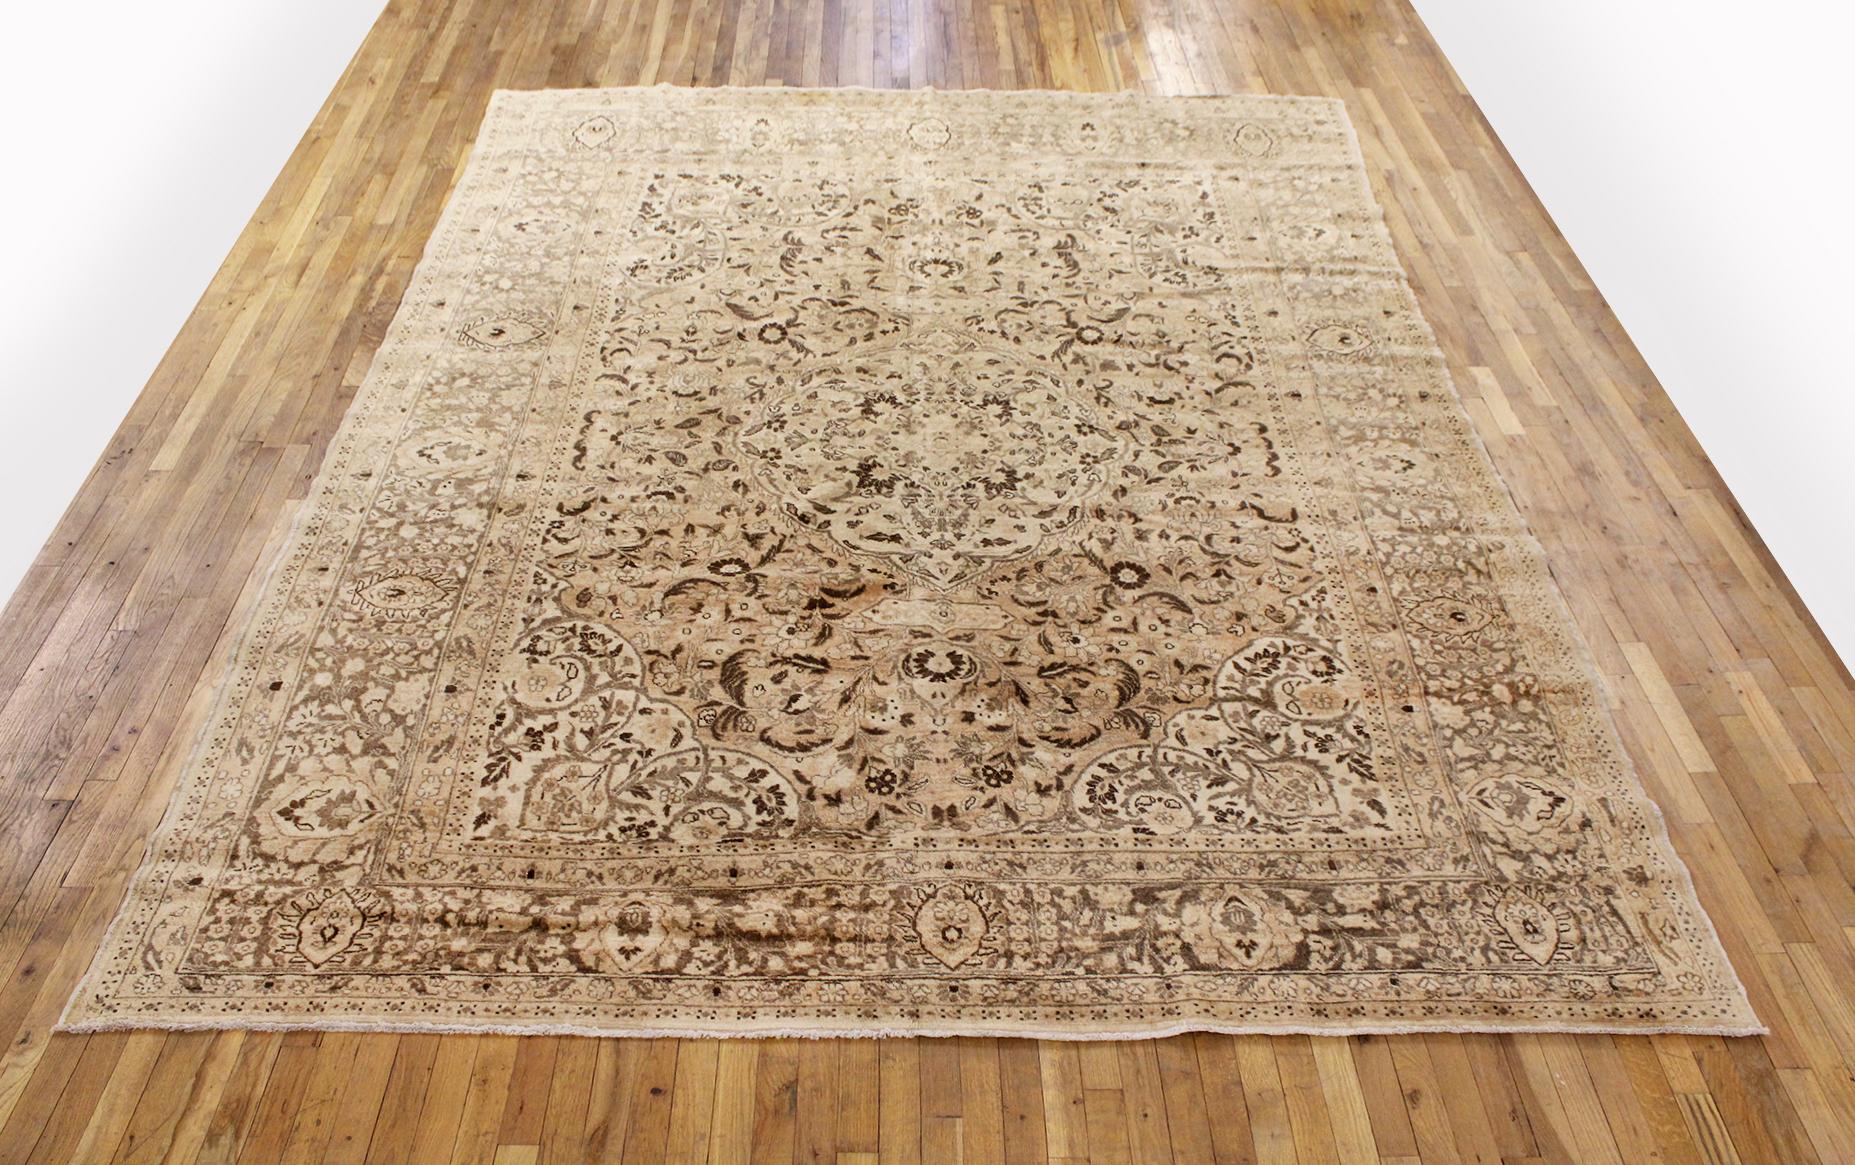 Antique Perisan Tabriz Oriental carpet, circa 1910, Room Sized

An antique Persian Tabriz oriental carpet, circa 1910. Size: 11'3